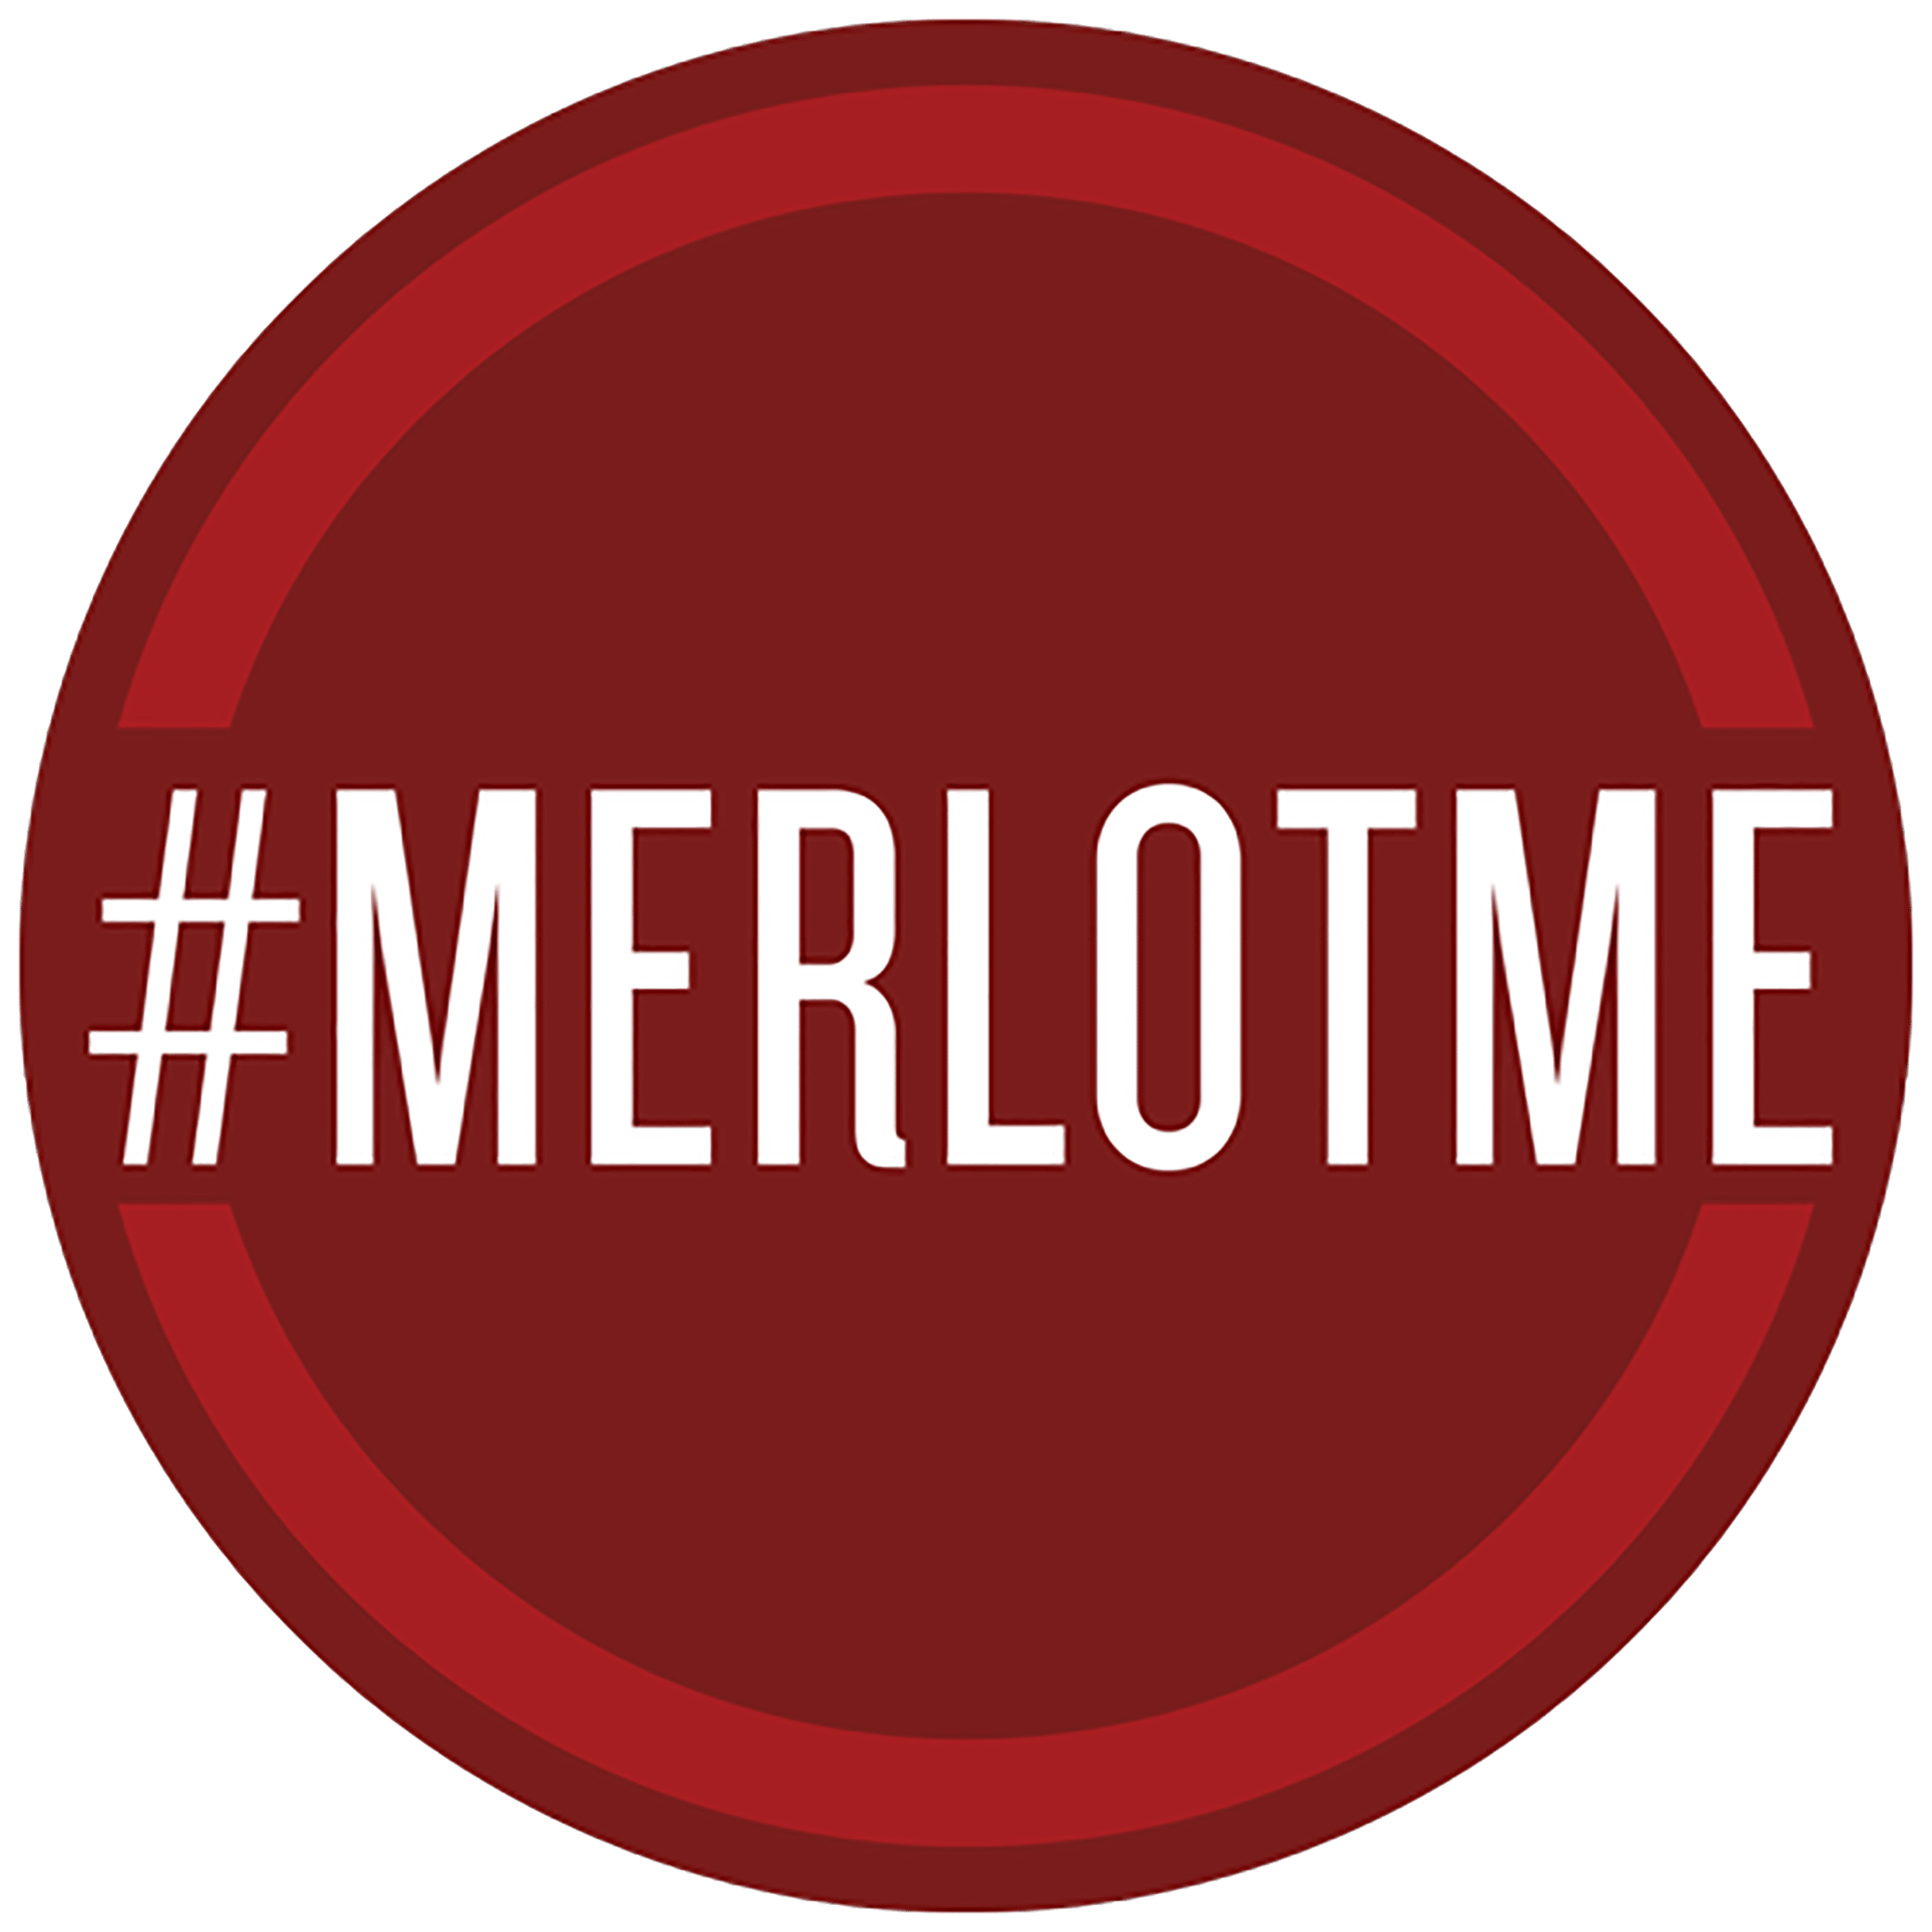 MerlotMeCircle